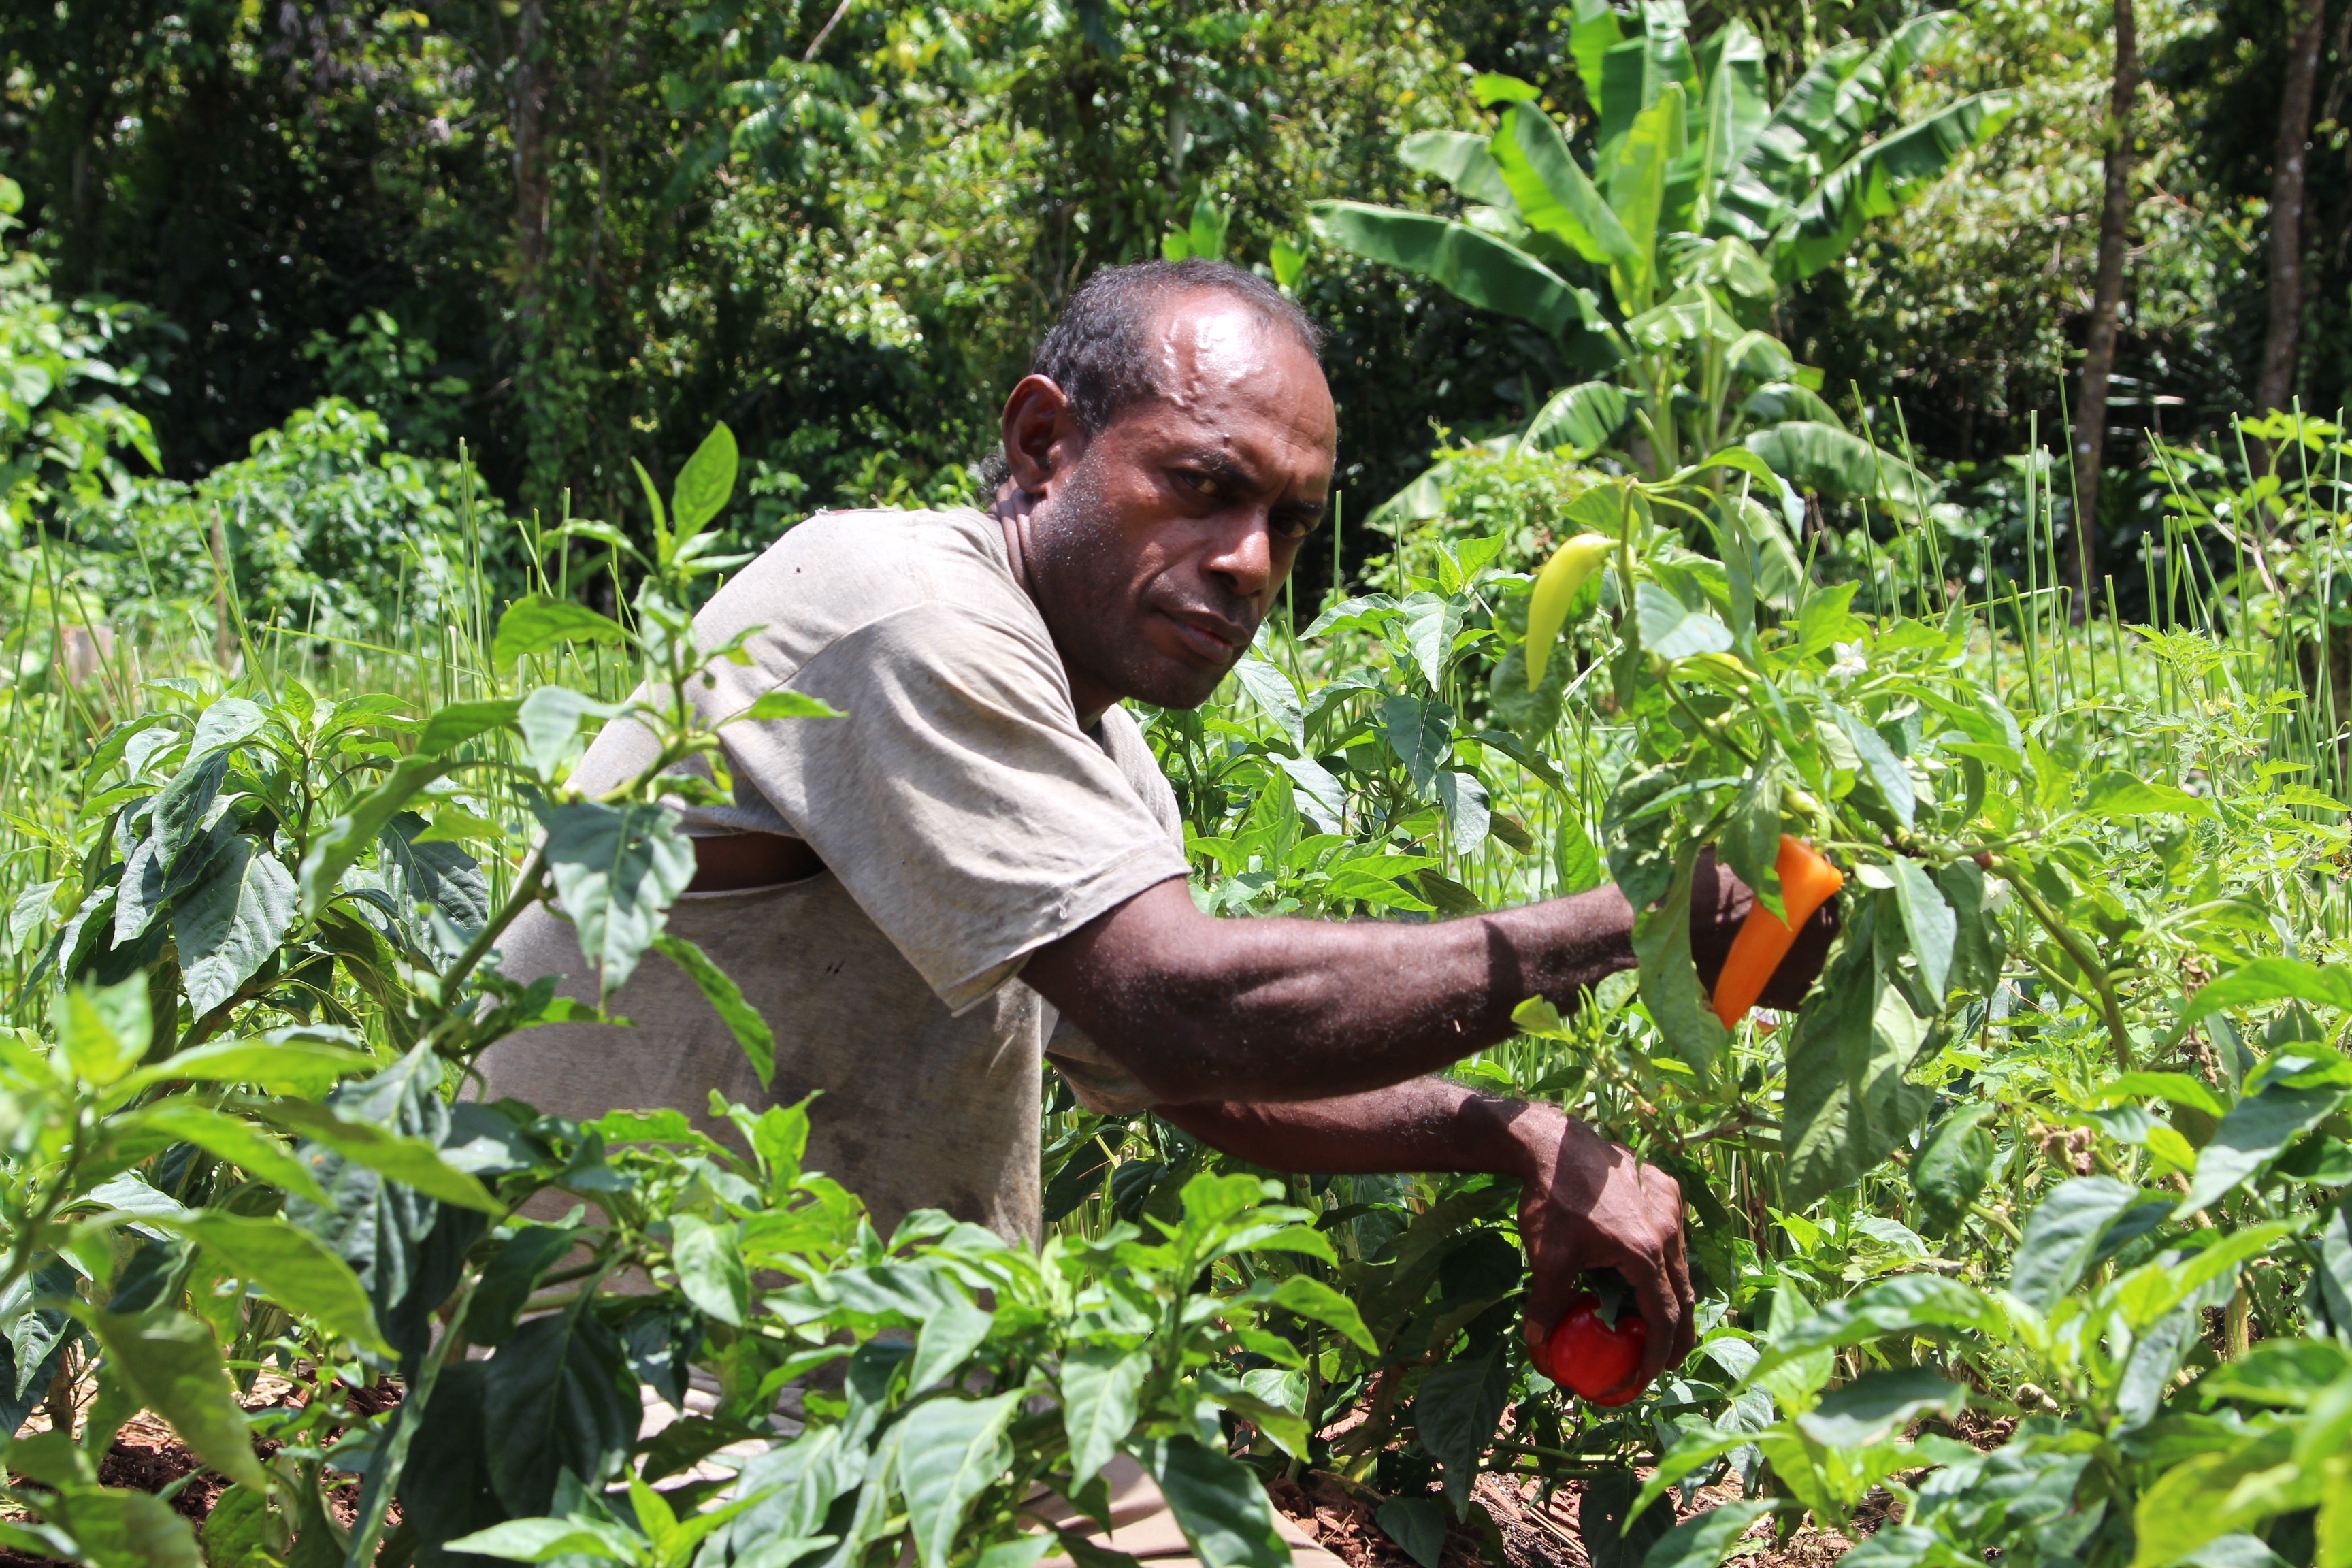 Seeds and training bring hope to struggling farmer | Solomon Islands |  World Vision International